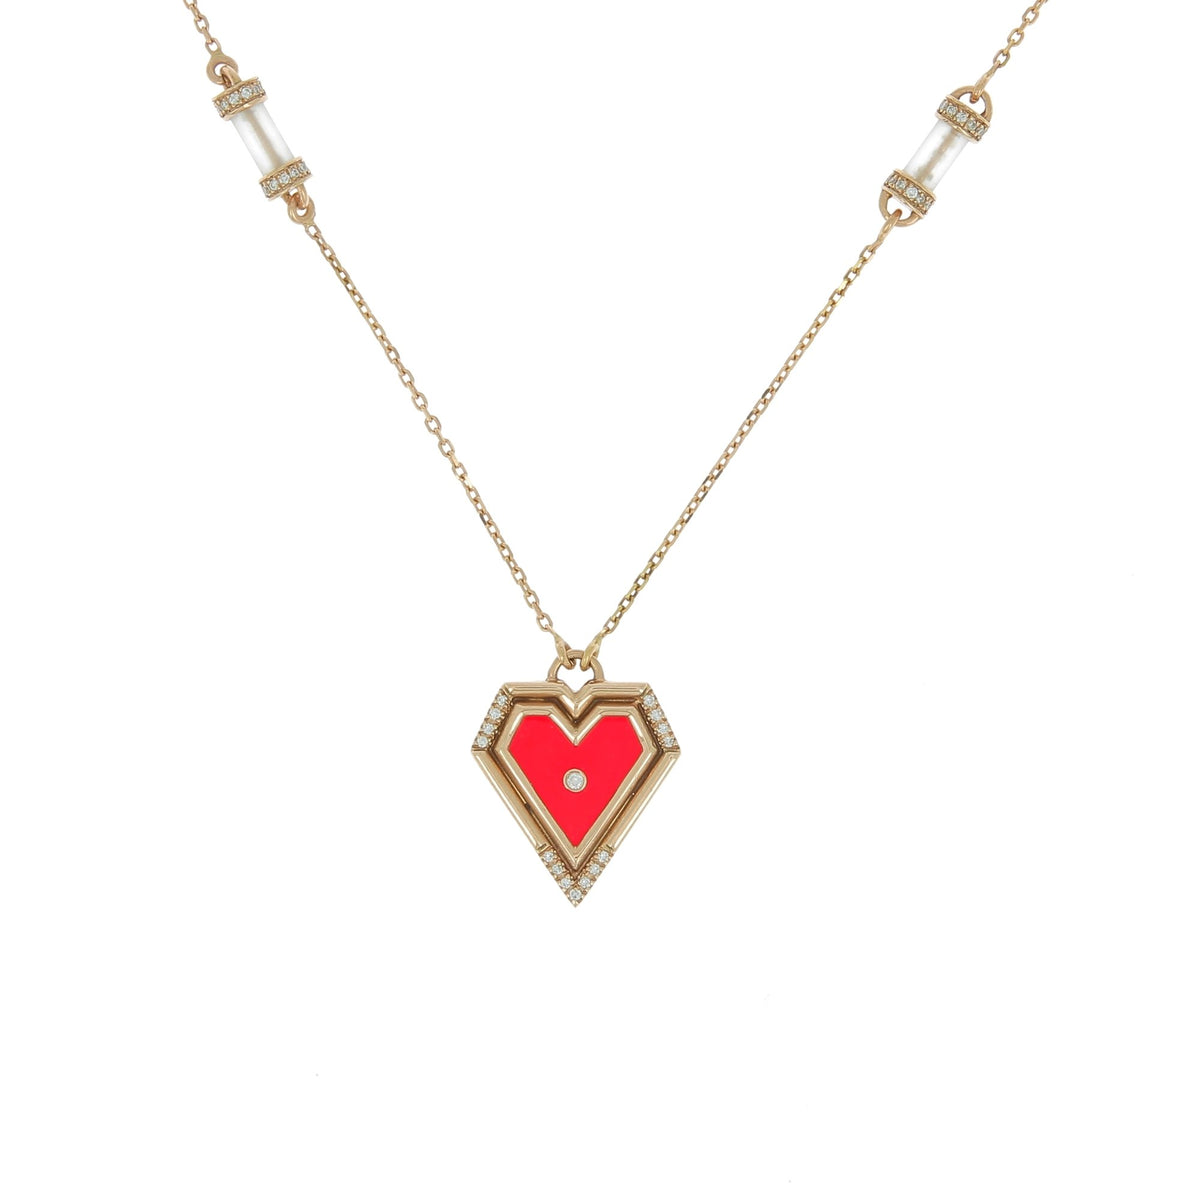 Heart amulet necklace